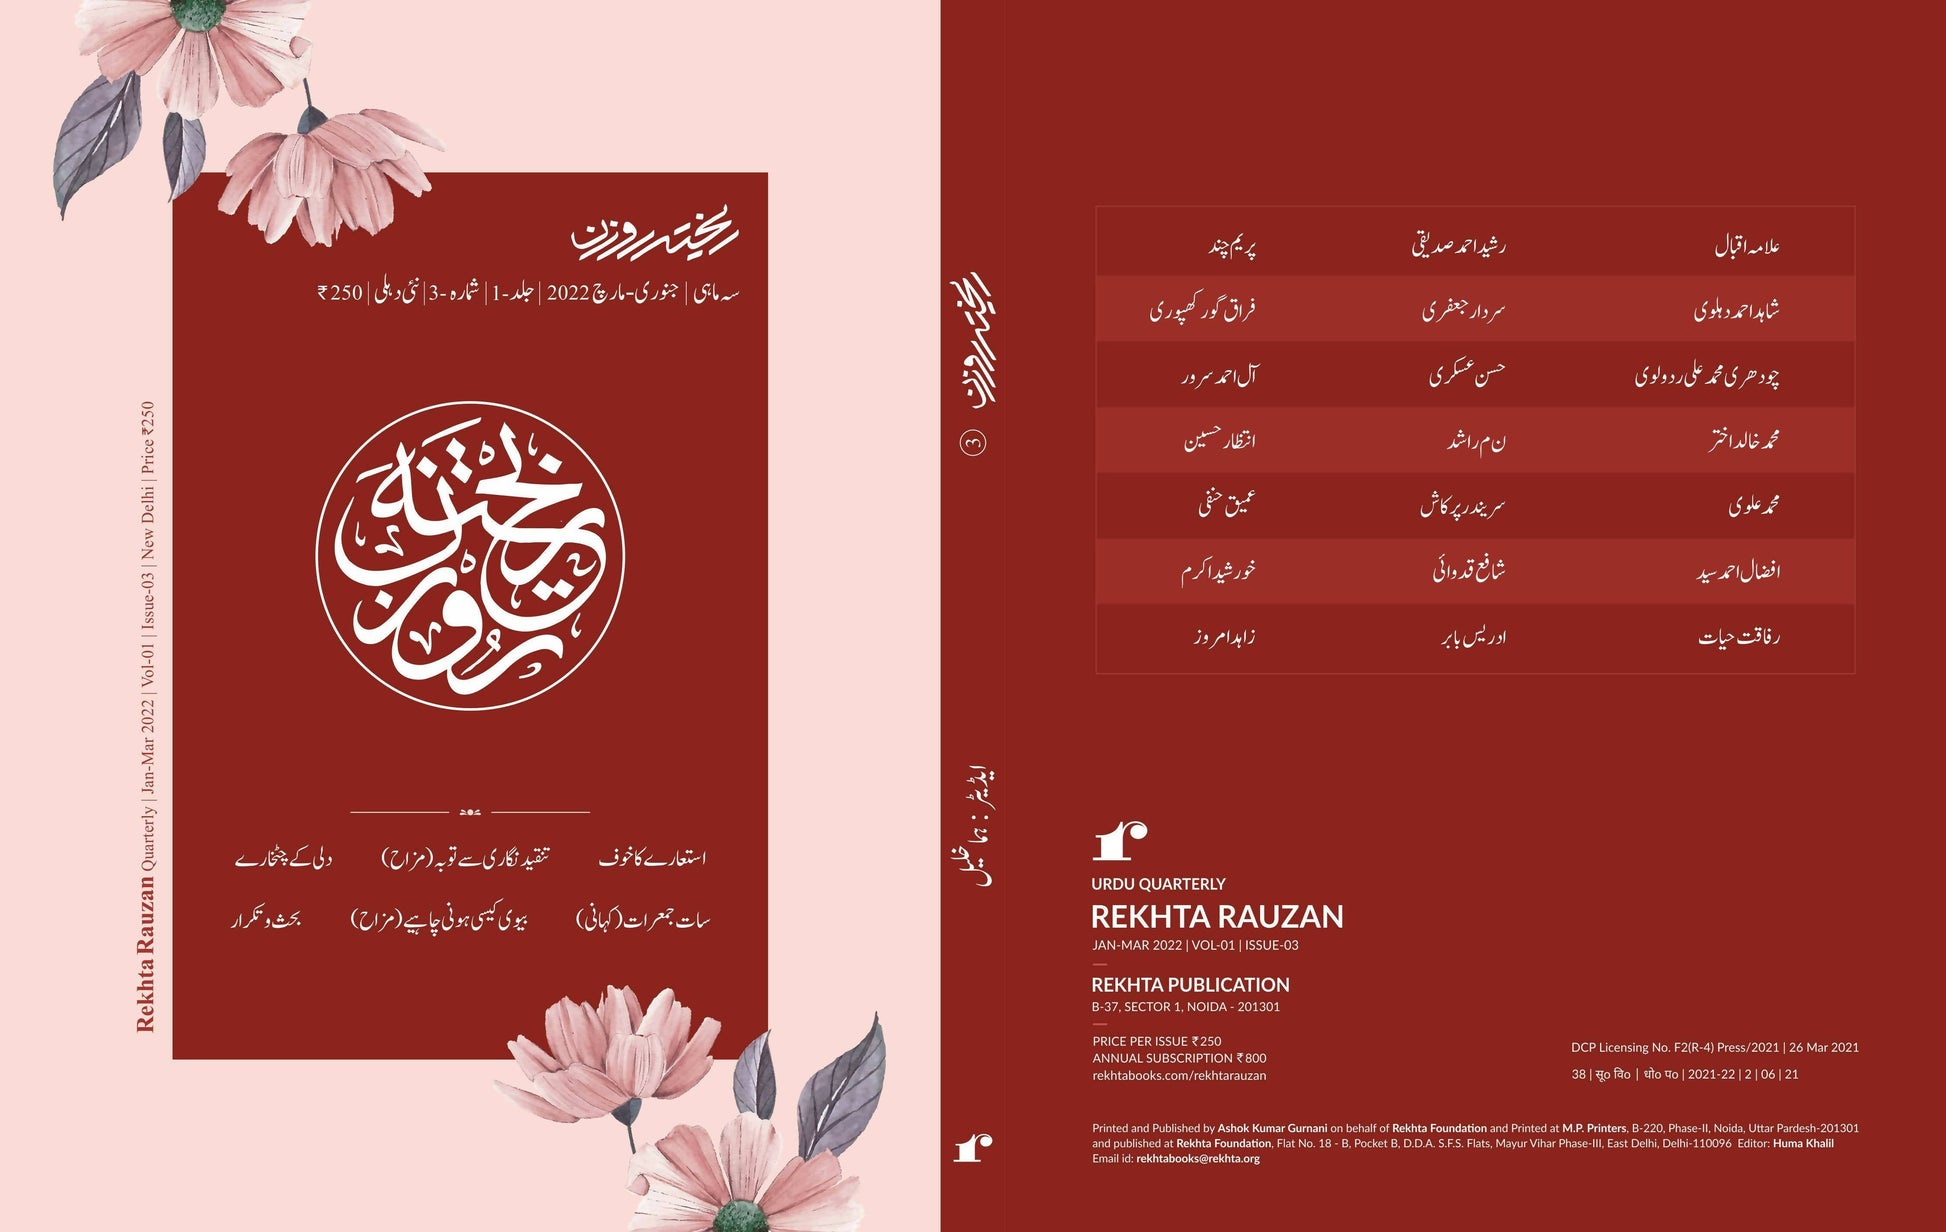 Rekhta Rauzan 3rd Edition